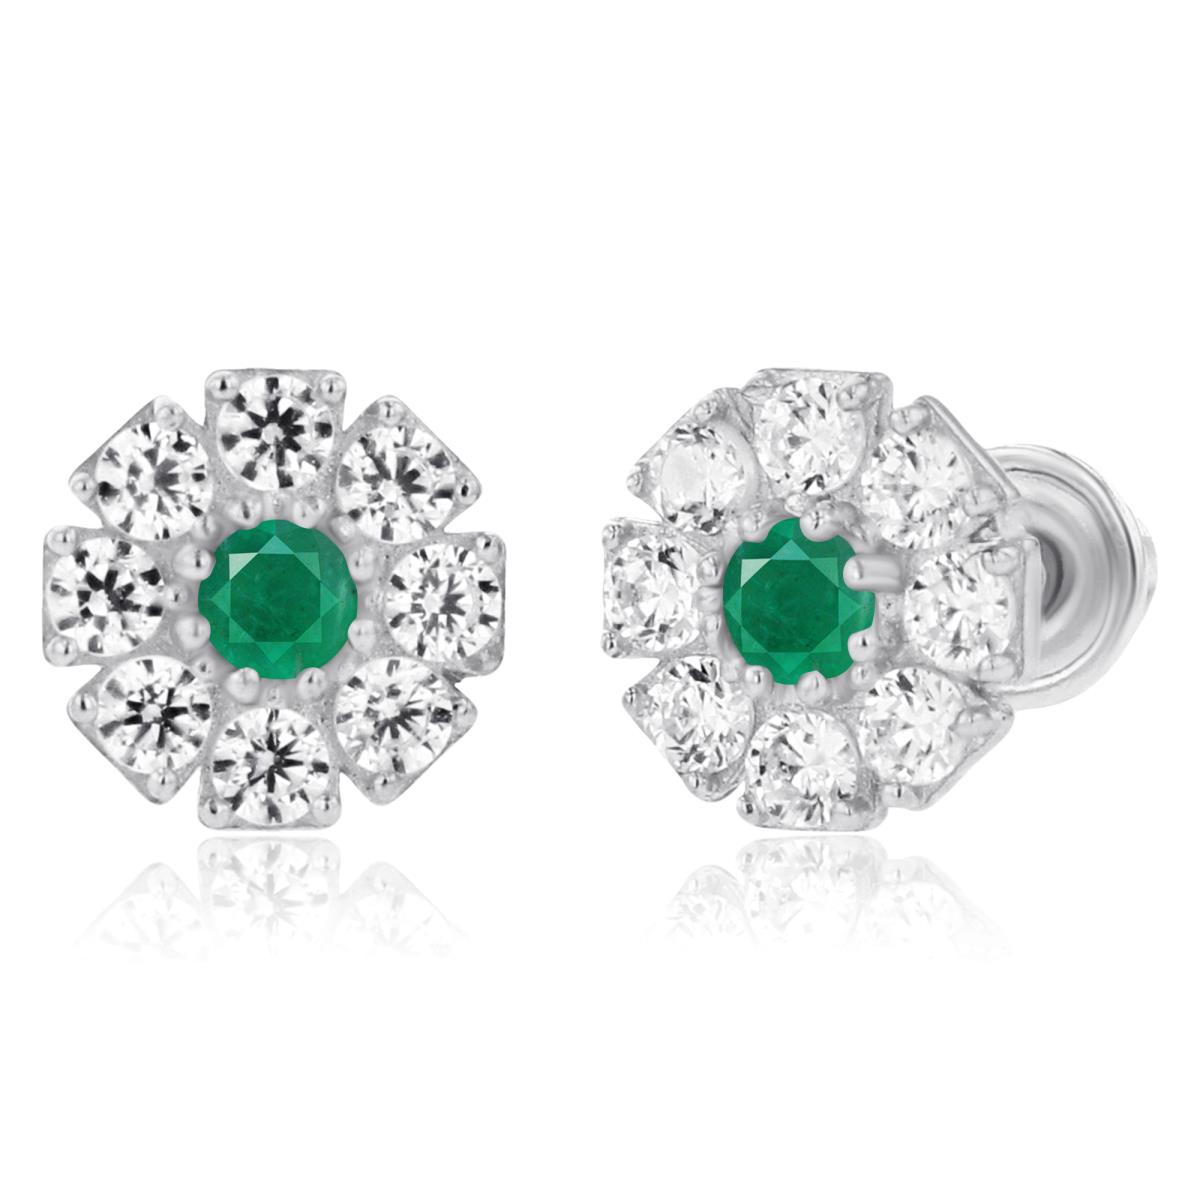 14K White Gold 2mm Round Emerald & 1.5mm Created White Sapphire Flower Screwback Earrings